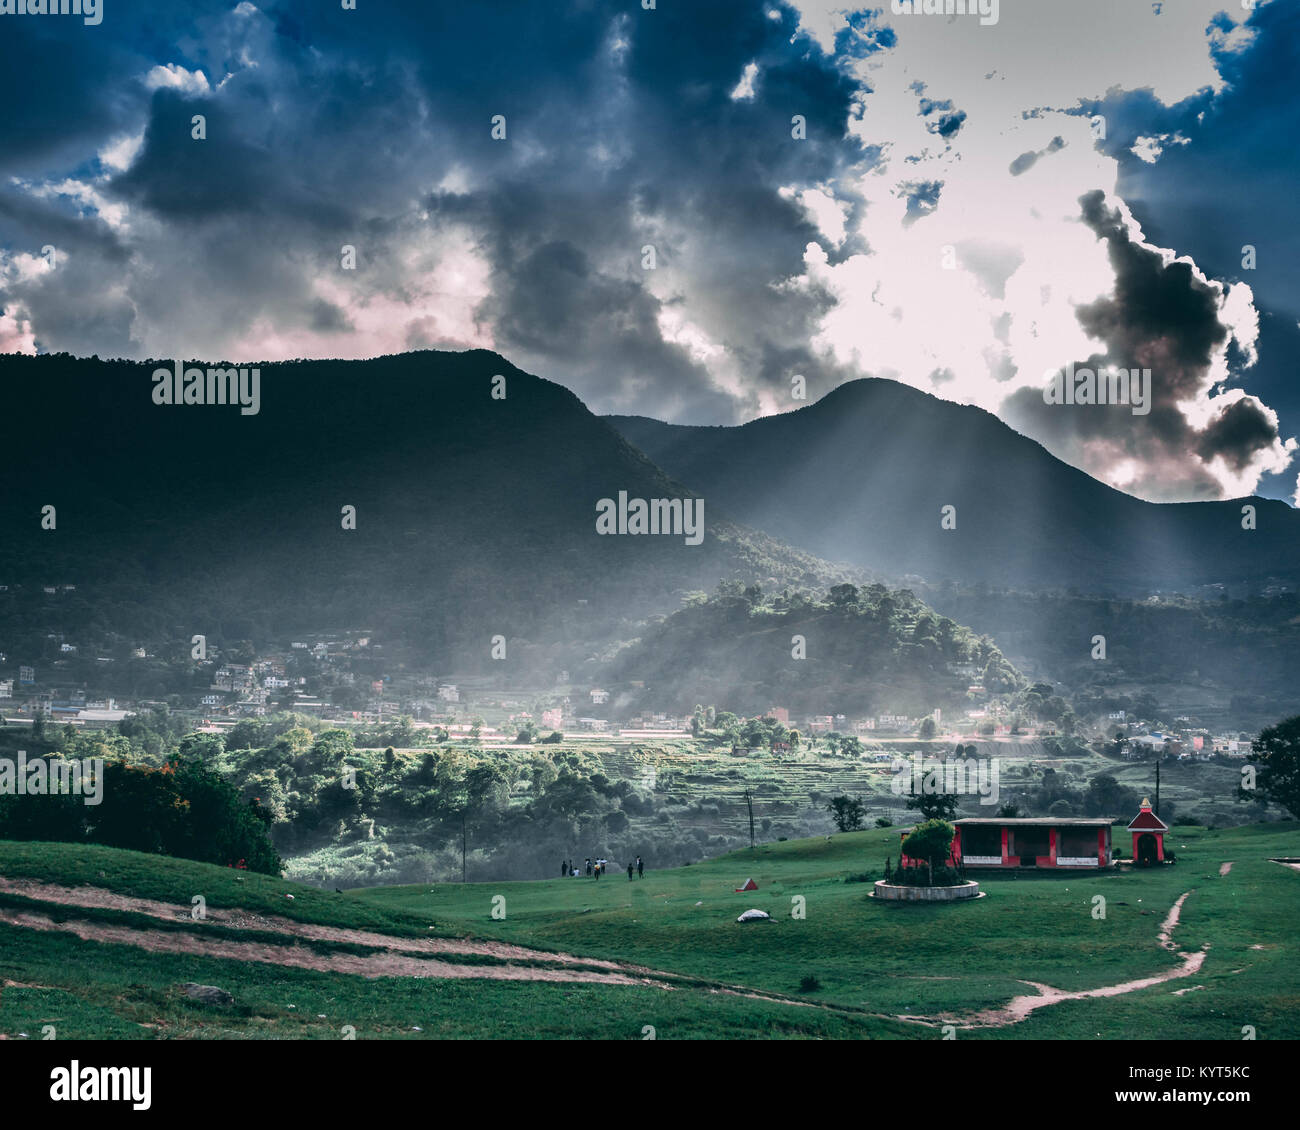 Kathmandu Images – Browse 40,044 Stock Photos, Vectors, and Video | Adobe  Stock